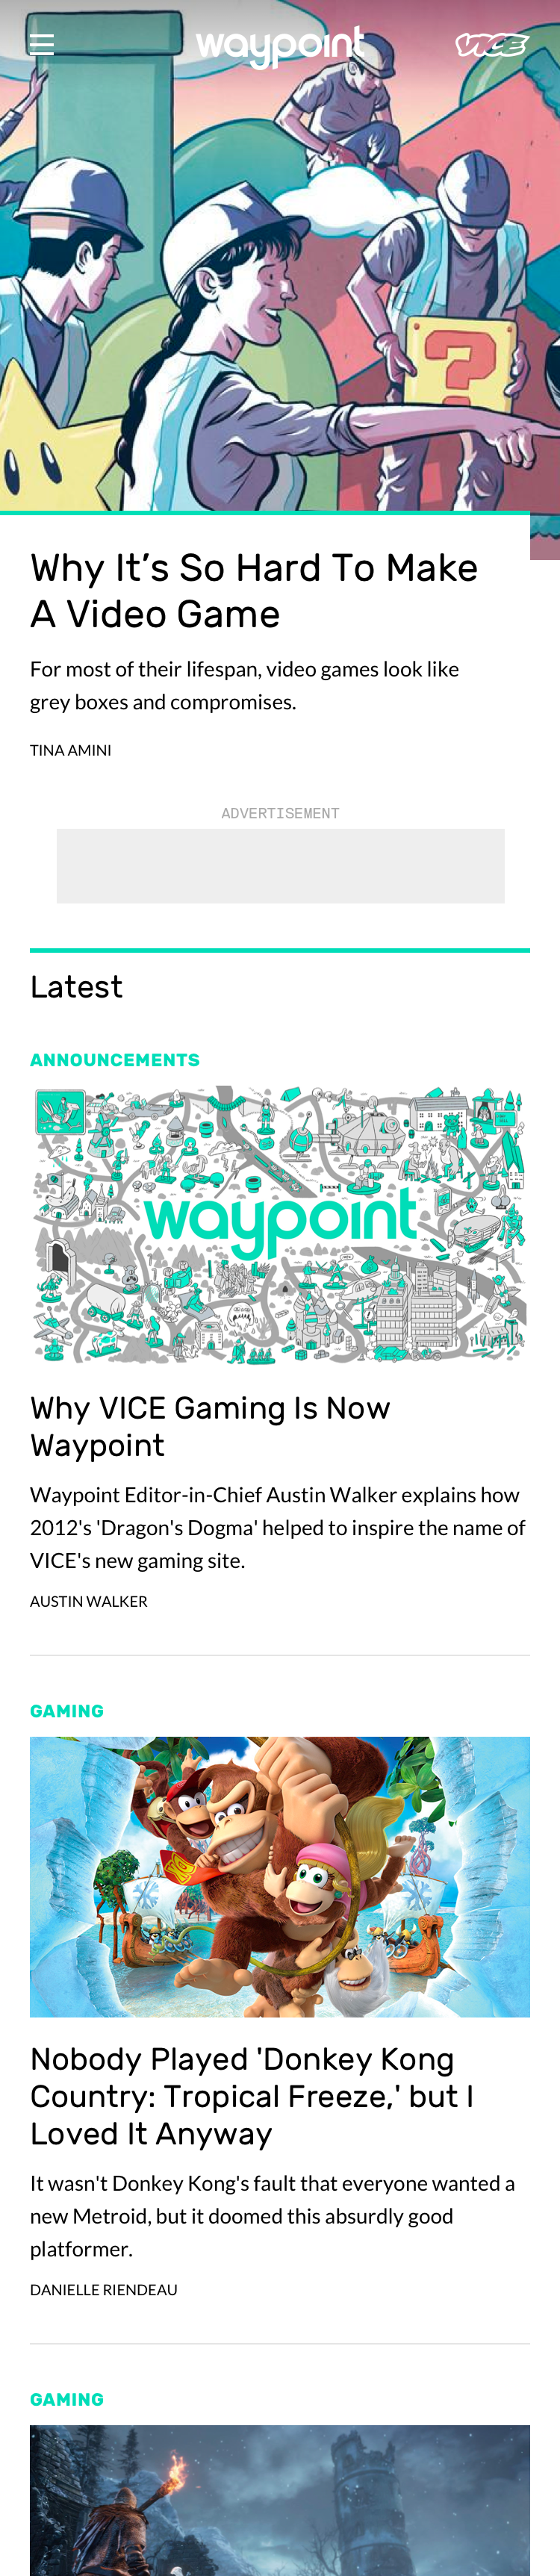 Waypoint's homepage